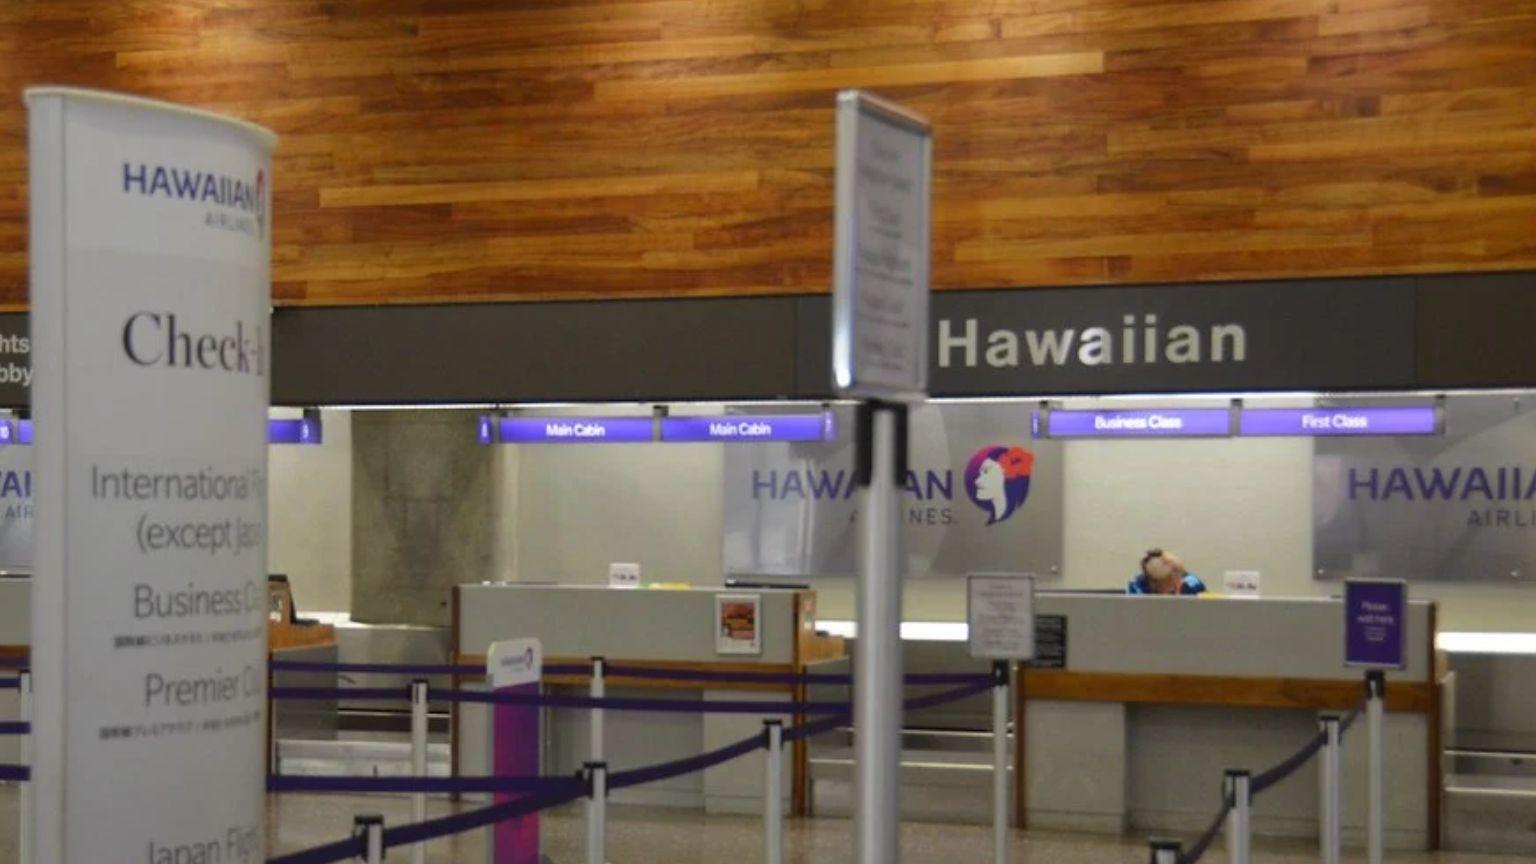 Hawaiian Airlines Plumeria Lounge, Terminal 1